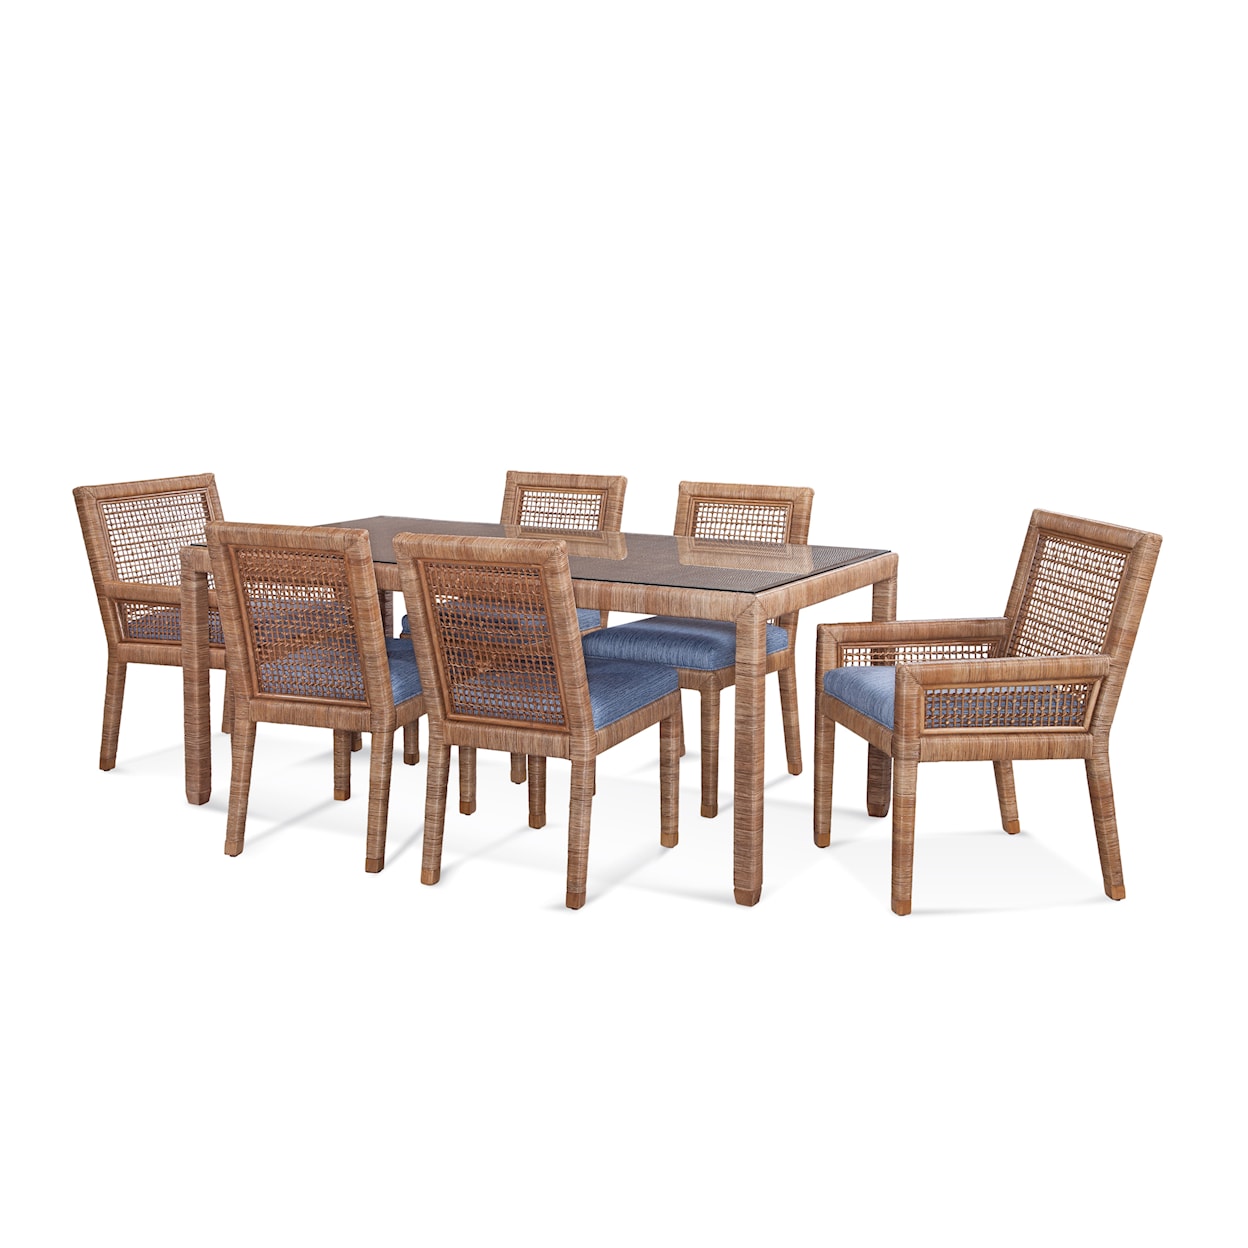 Braxton Culler Pine Isle Pine Isle Rectangular Dining Table